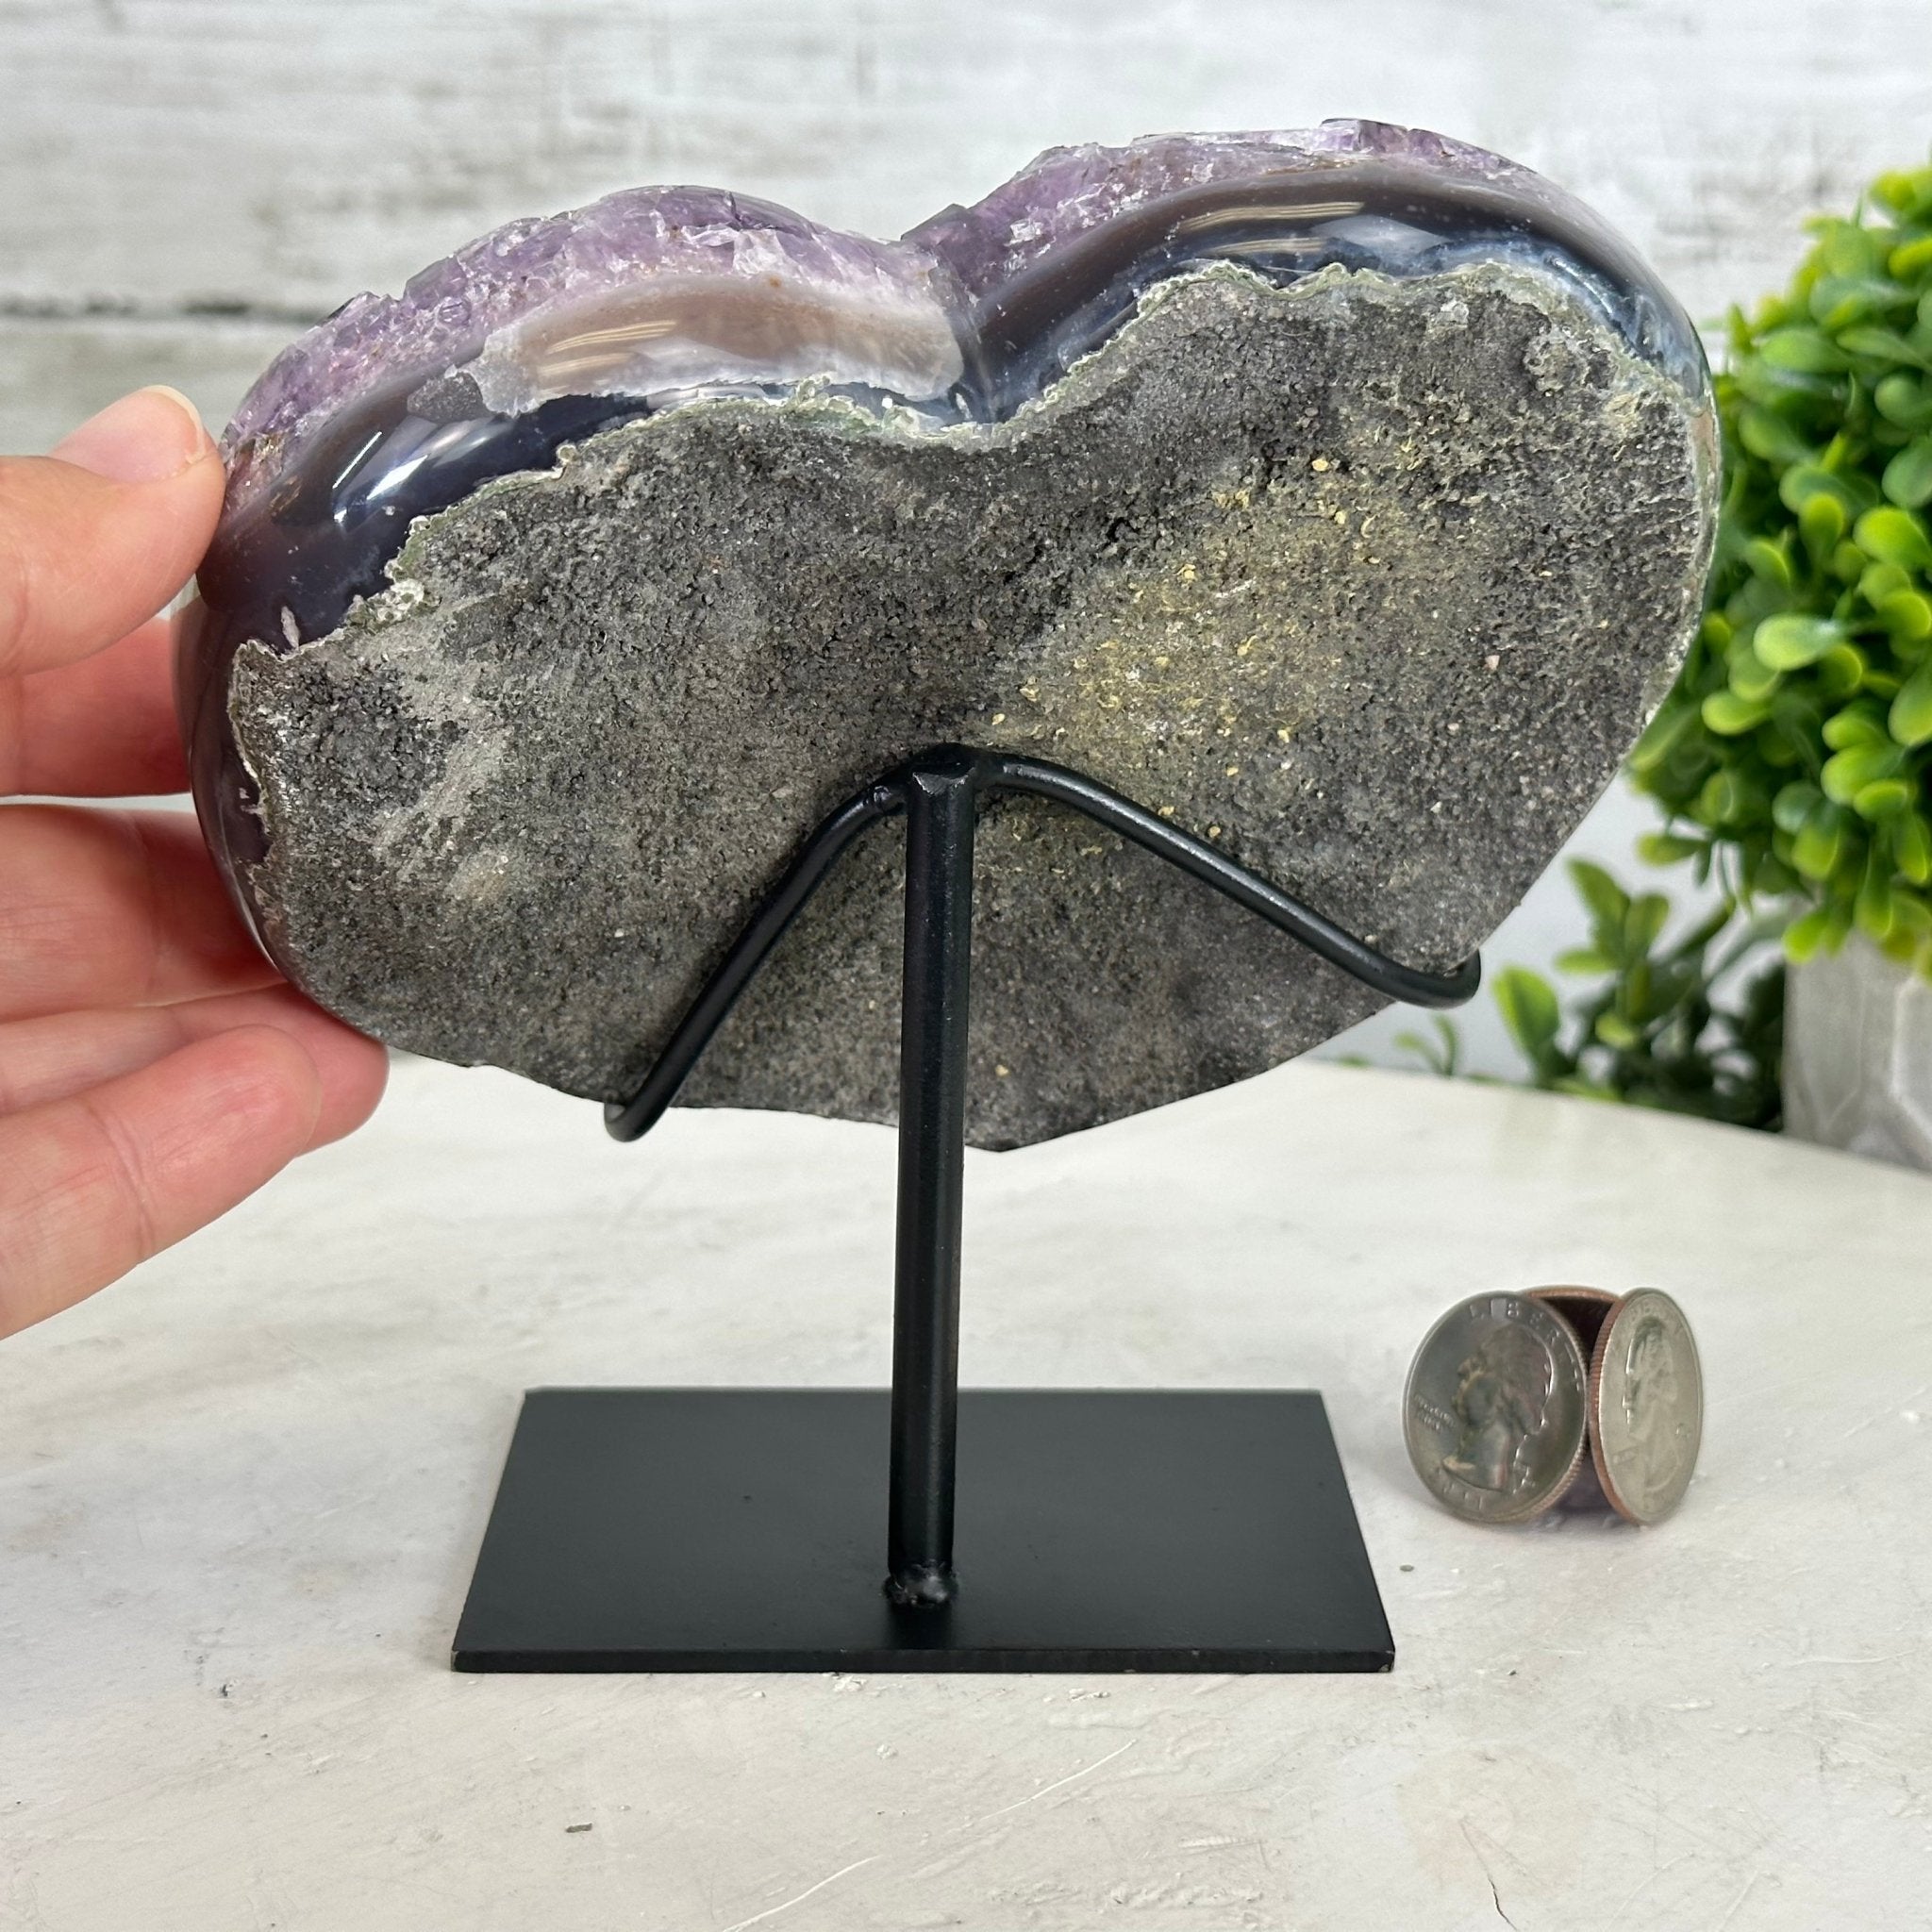 Extra Quality Amethyst Heart Geode w/ metal stand, 2.6 lbs & 5.5" Tall #5463-0274 by Brazil Gems - Brazil GemsBrazil GemsExtra Quality Amethyst Heart Geode w/ metal stand, 2.6 lbs & 5.5" Tall #5463-0274 by Brazil GemsHearts5463-0274